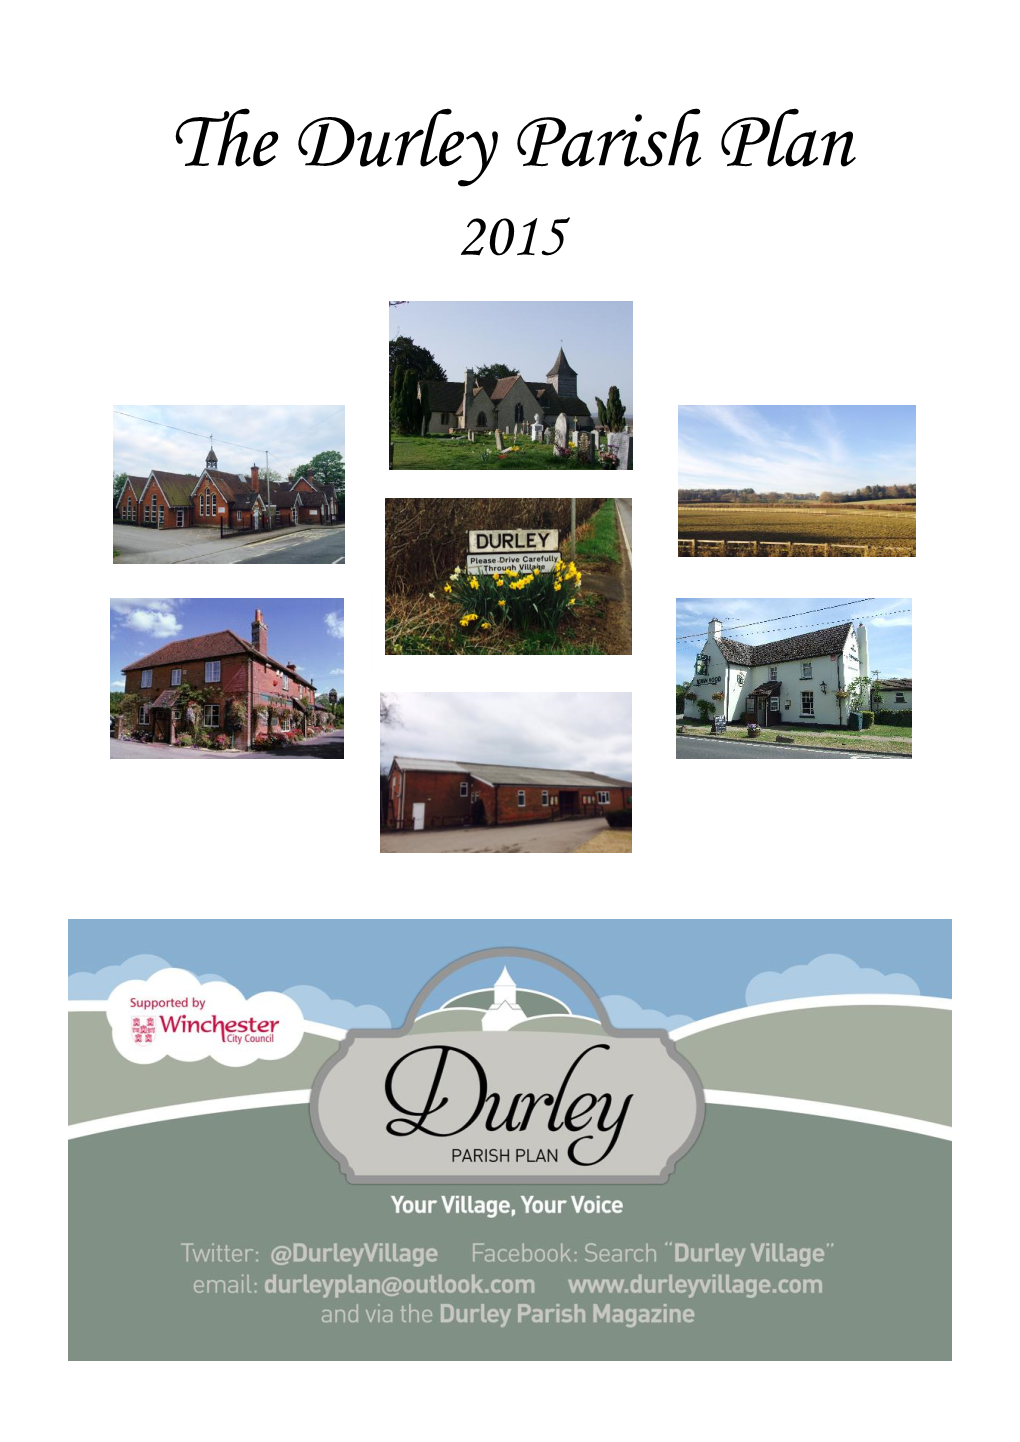 The Durley Parish Plan 2015